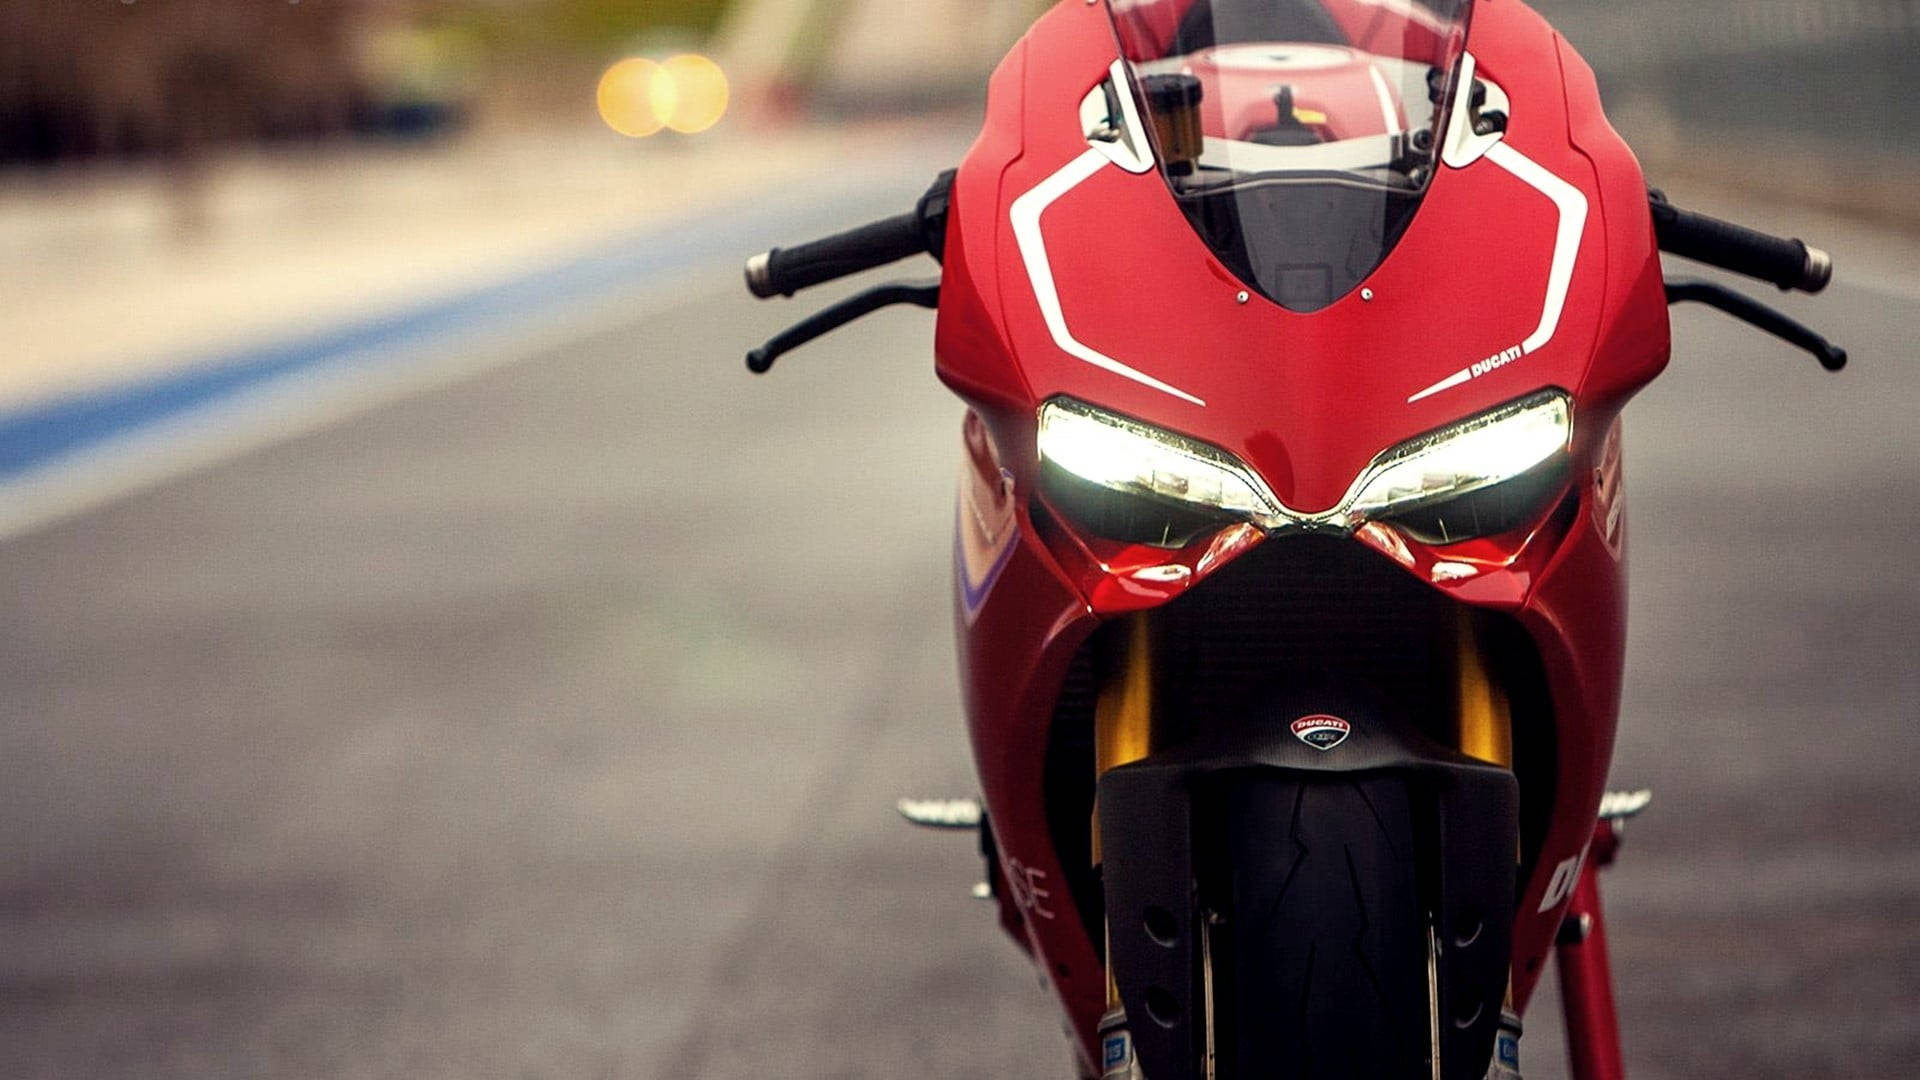 Ducati Red Bike Front View Wallpaper